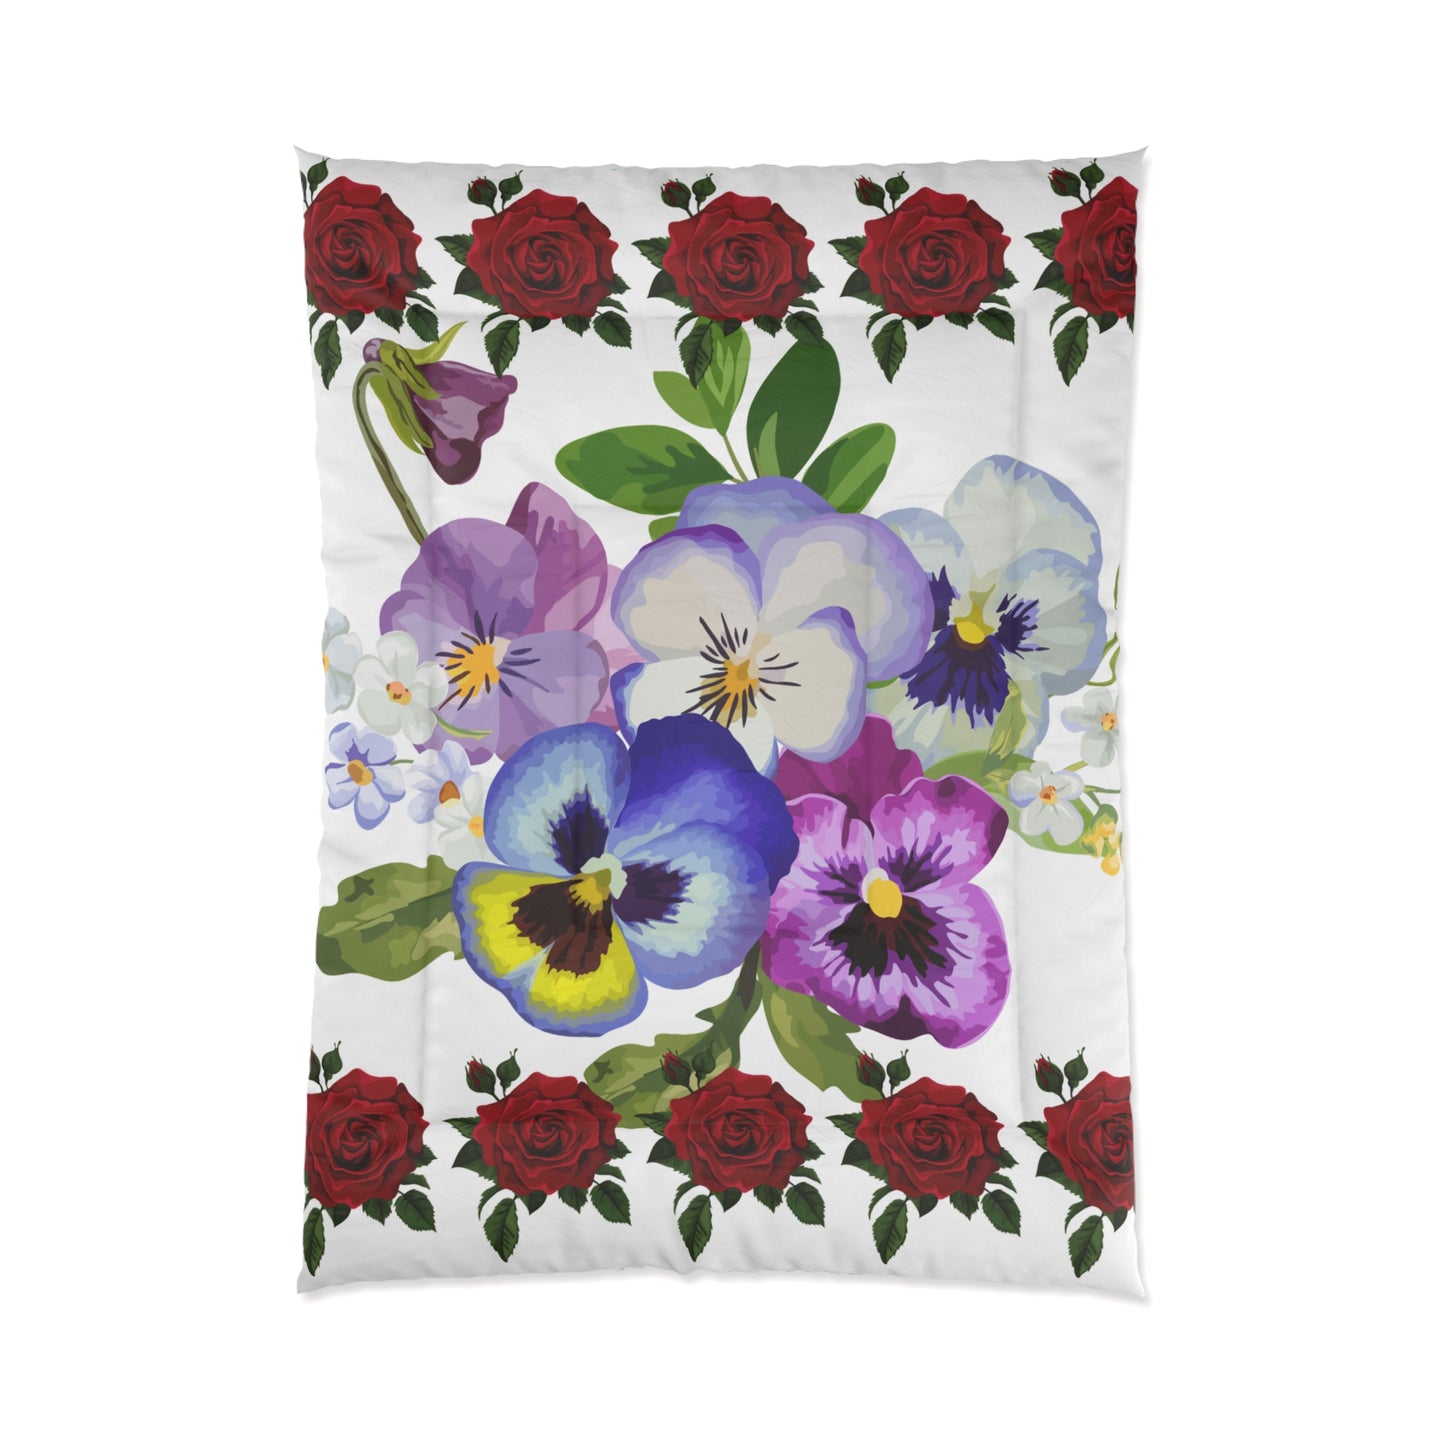 The Ultimate Doona blanket Comforter purple flowers and rose edges